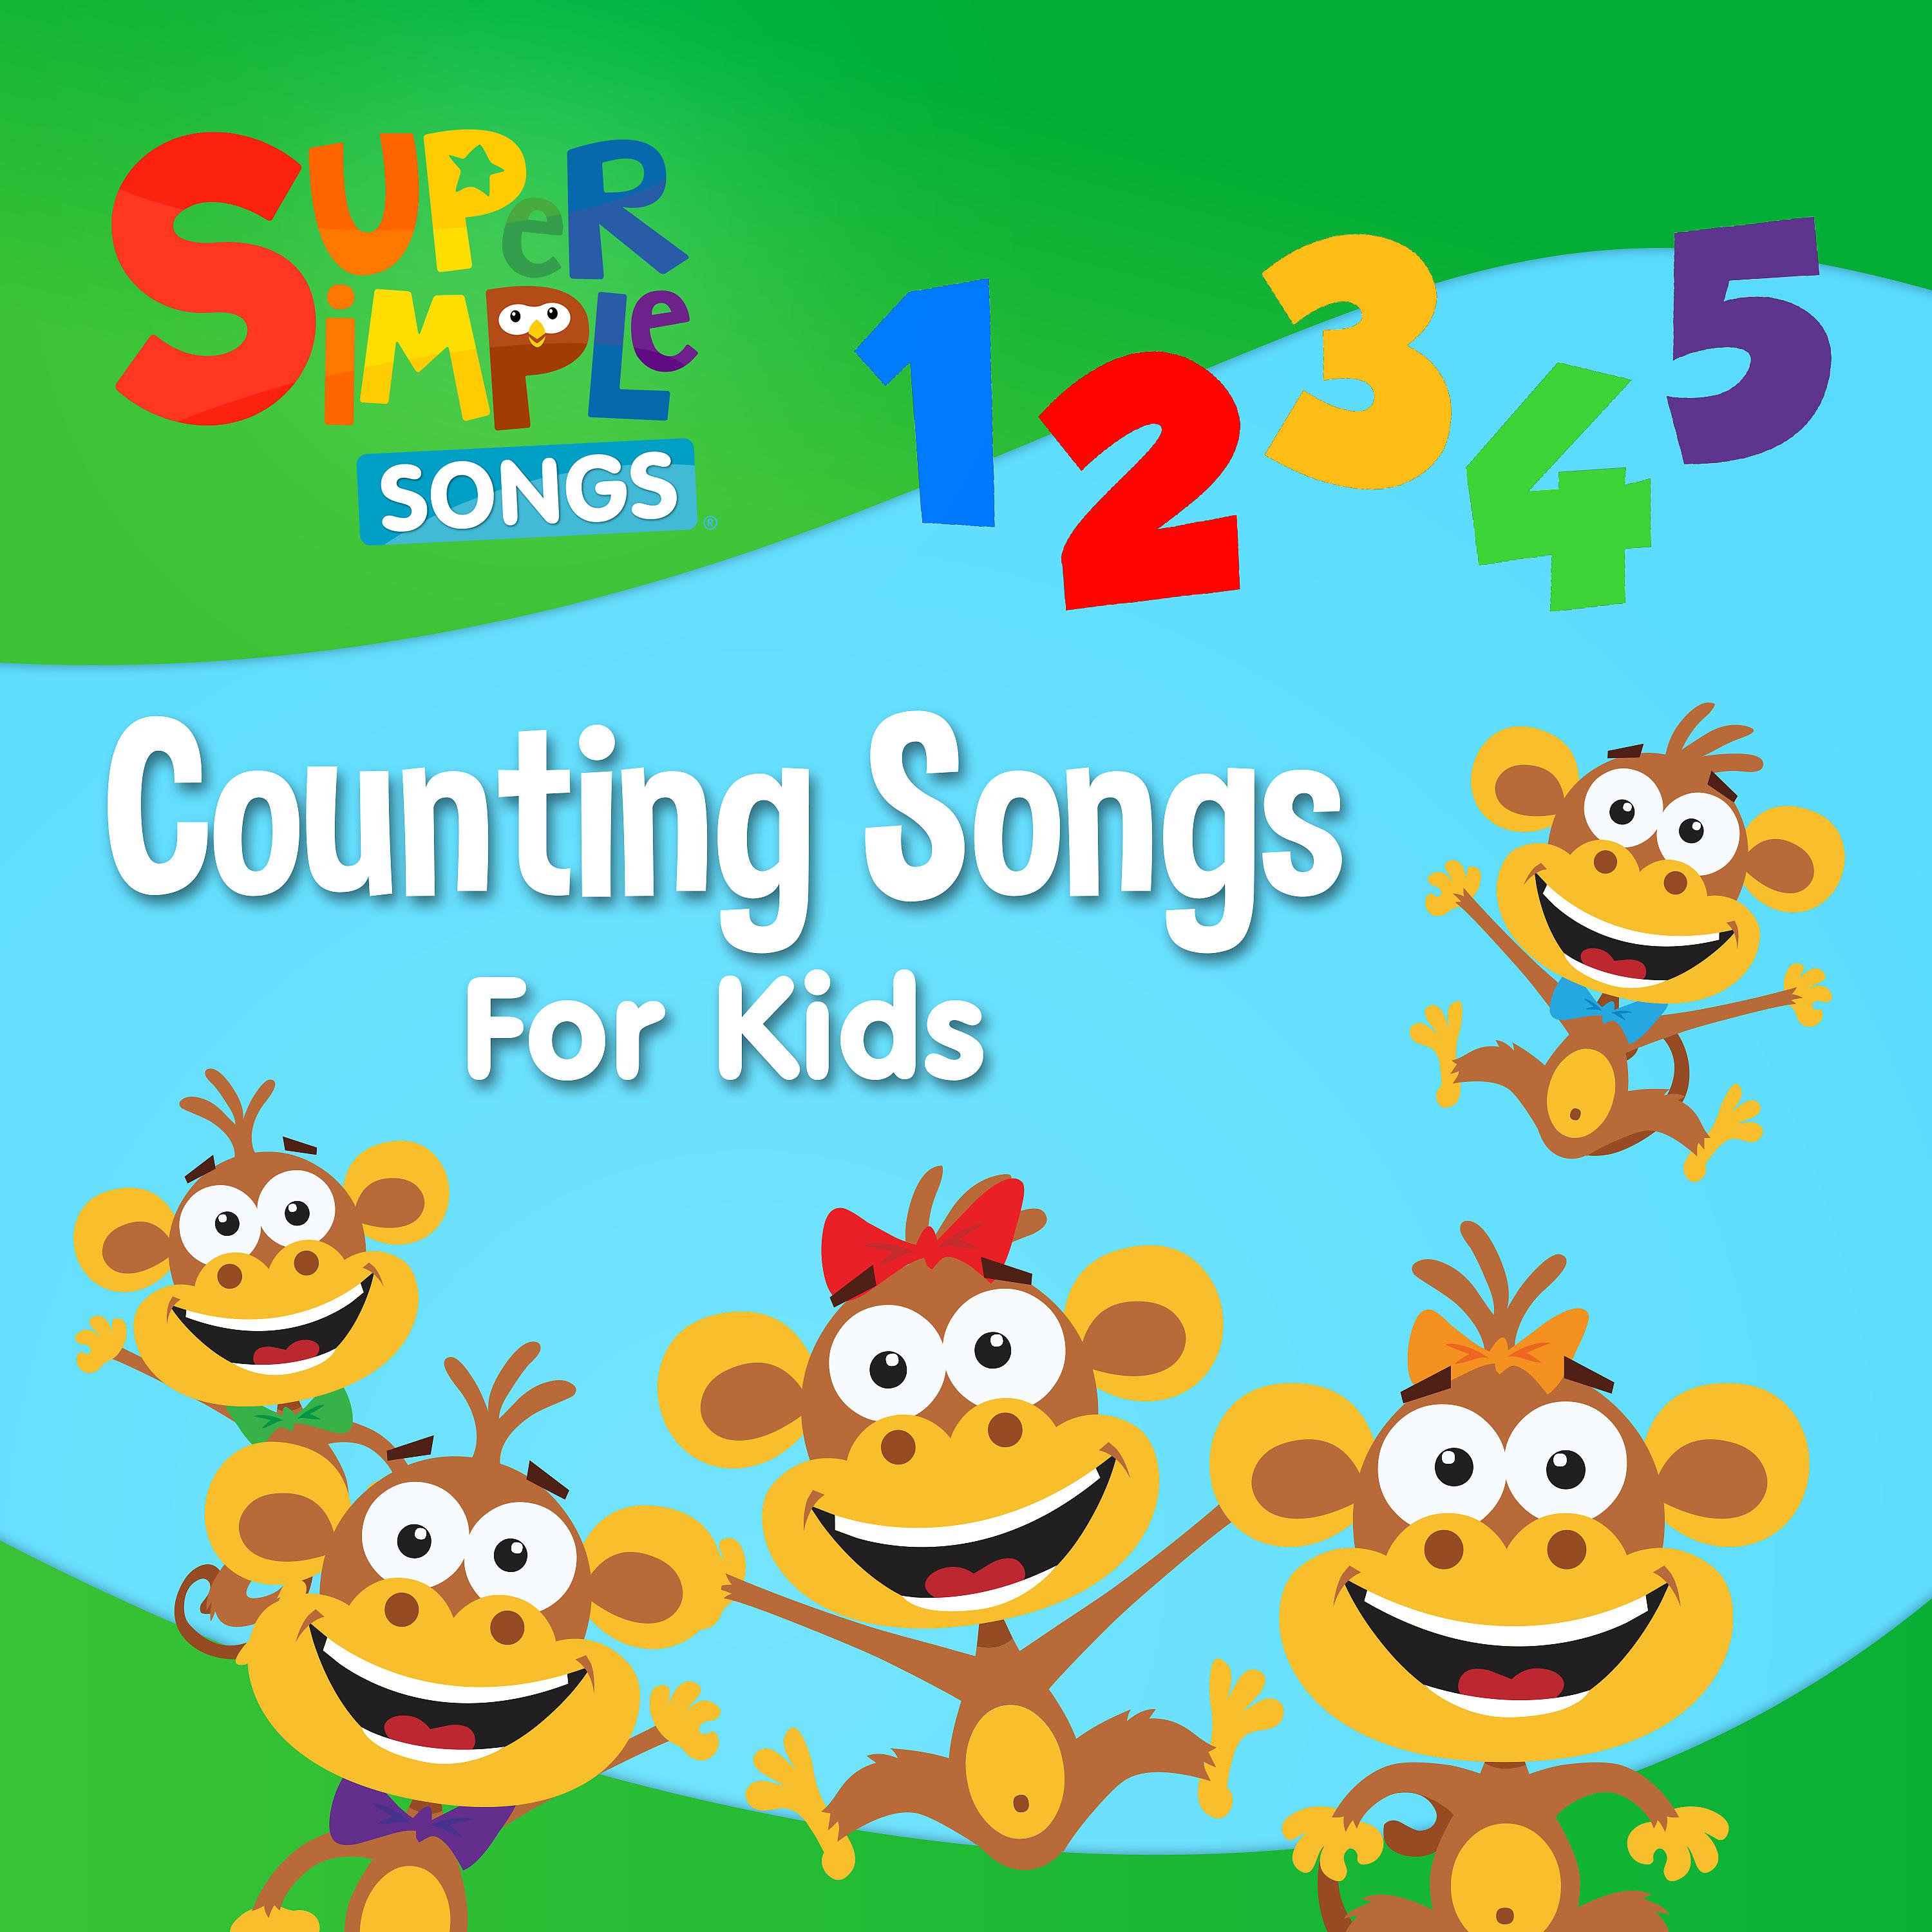 Baby simple songs. Супер Симпл Сонг. Super simple Songs. Super simple Songs Kids Songs. Song for Kids.